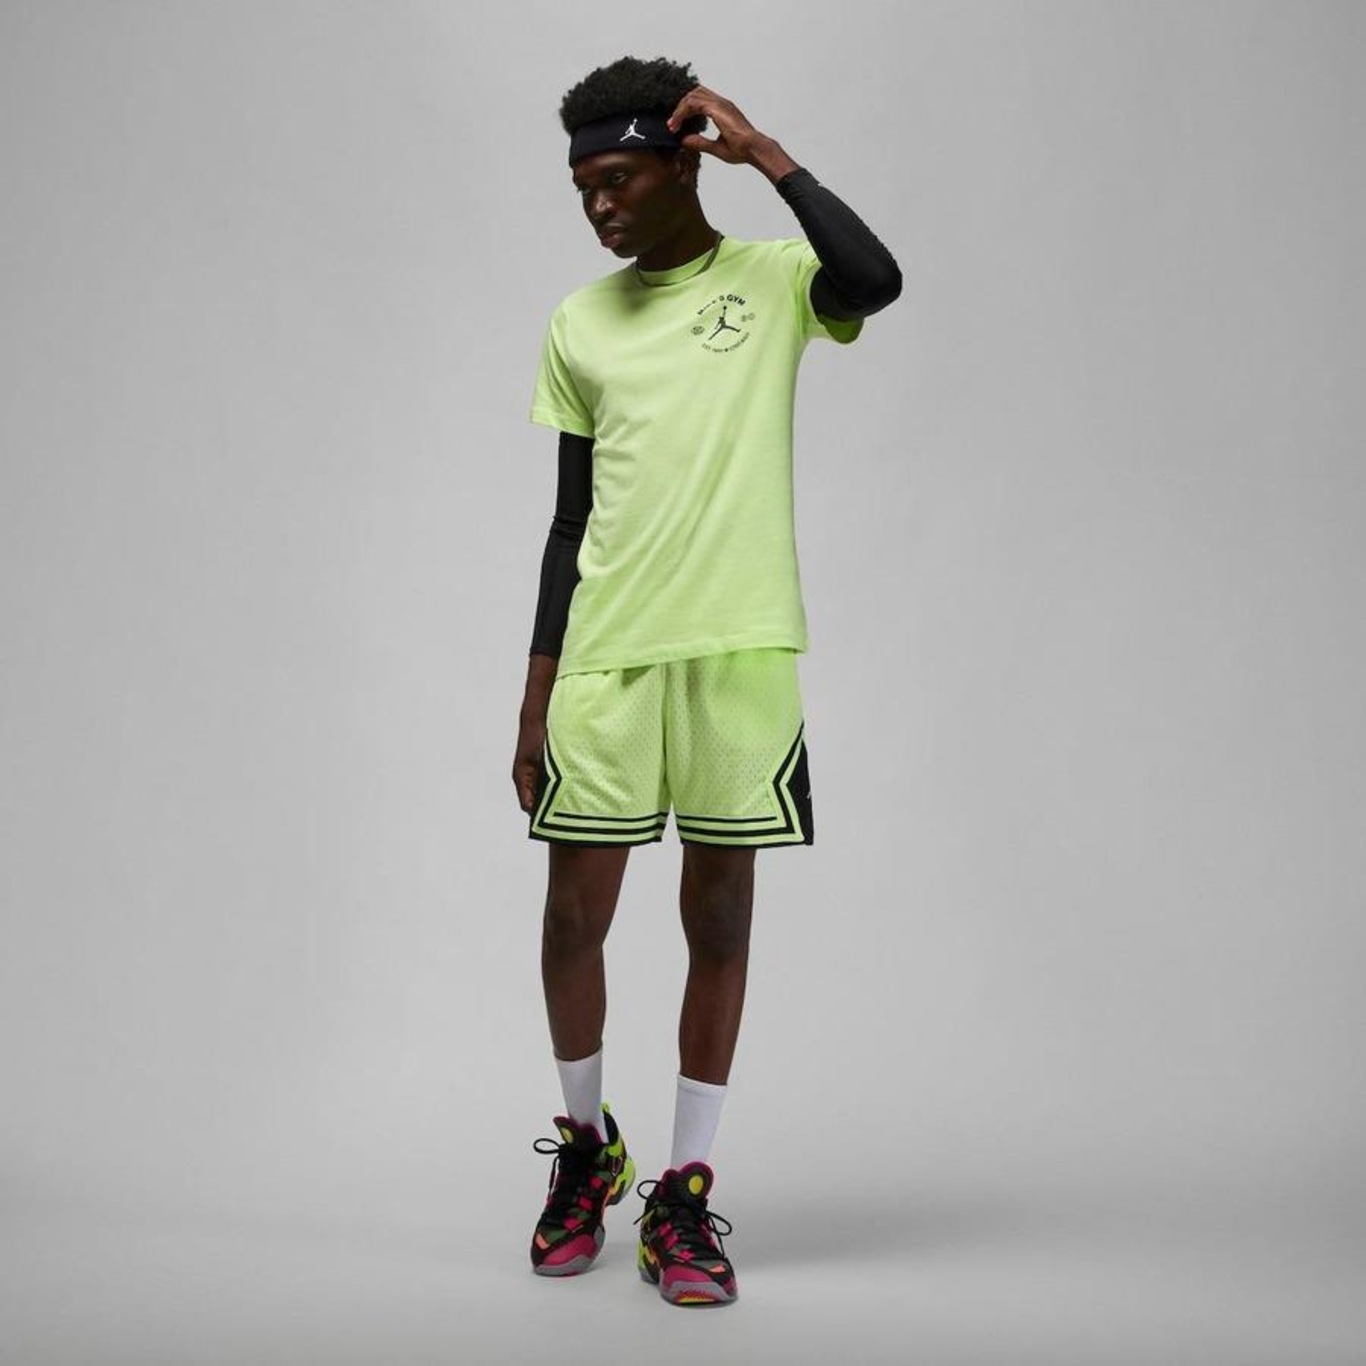 Camiseta Nike Jordan Sport BC - Masculina